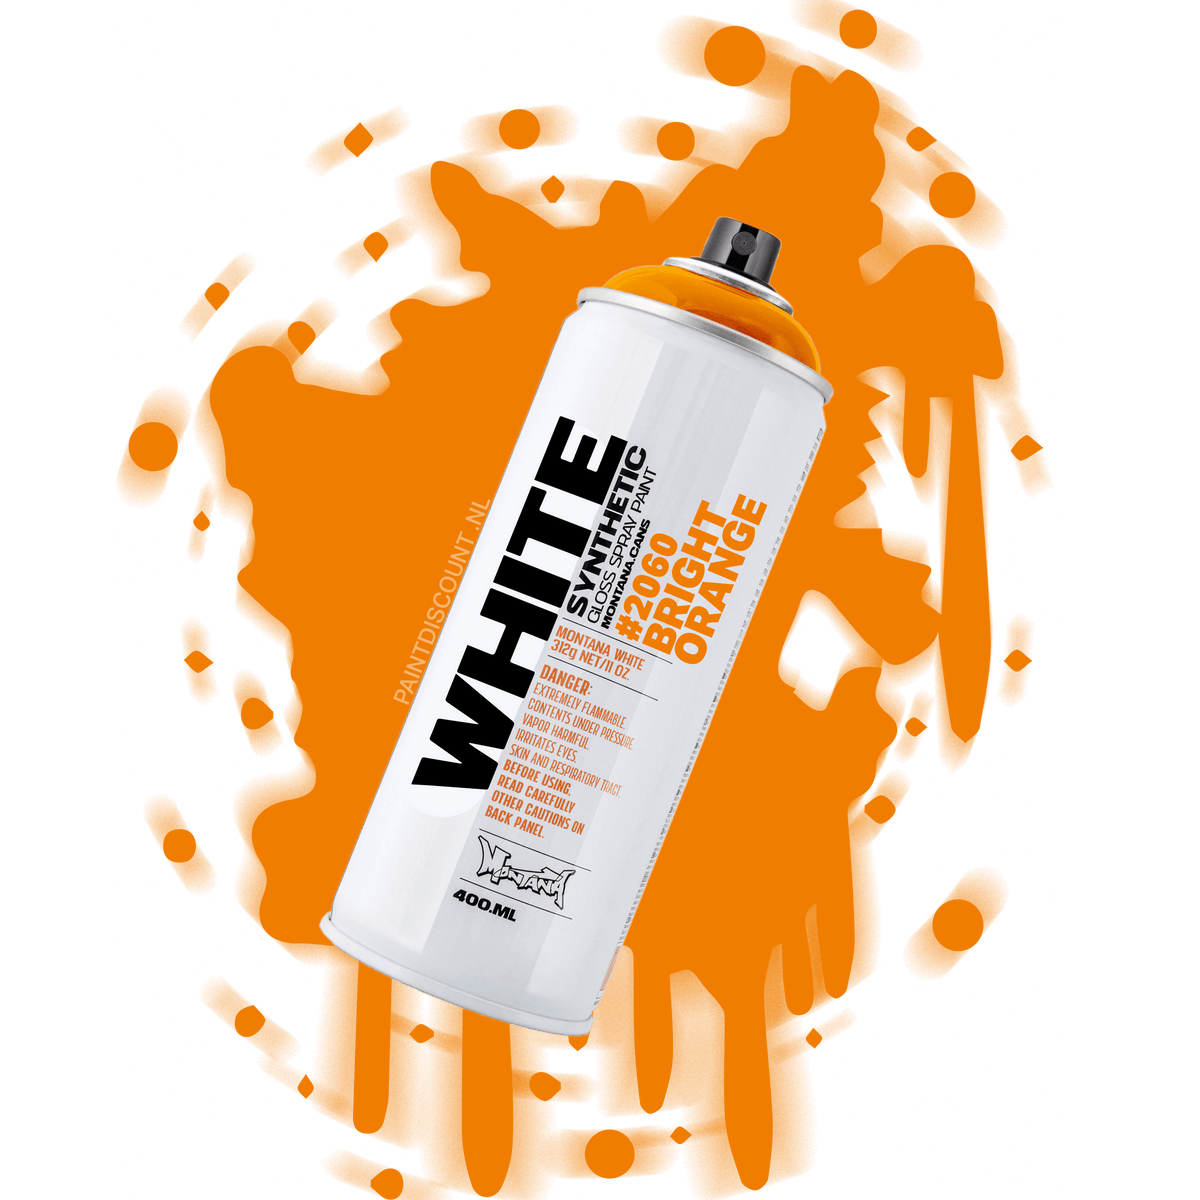 Montana White Synthetic Spray Paint